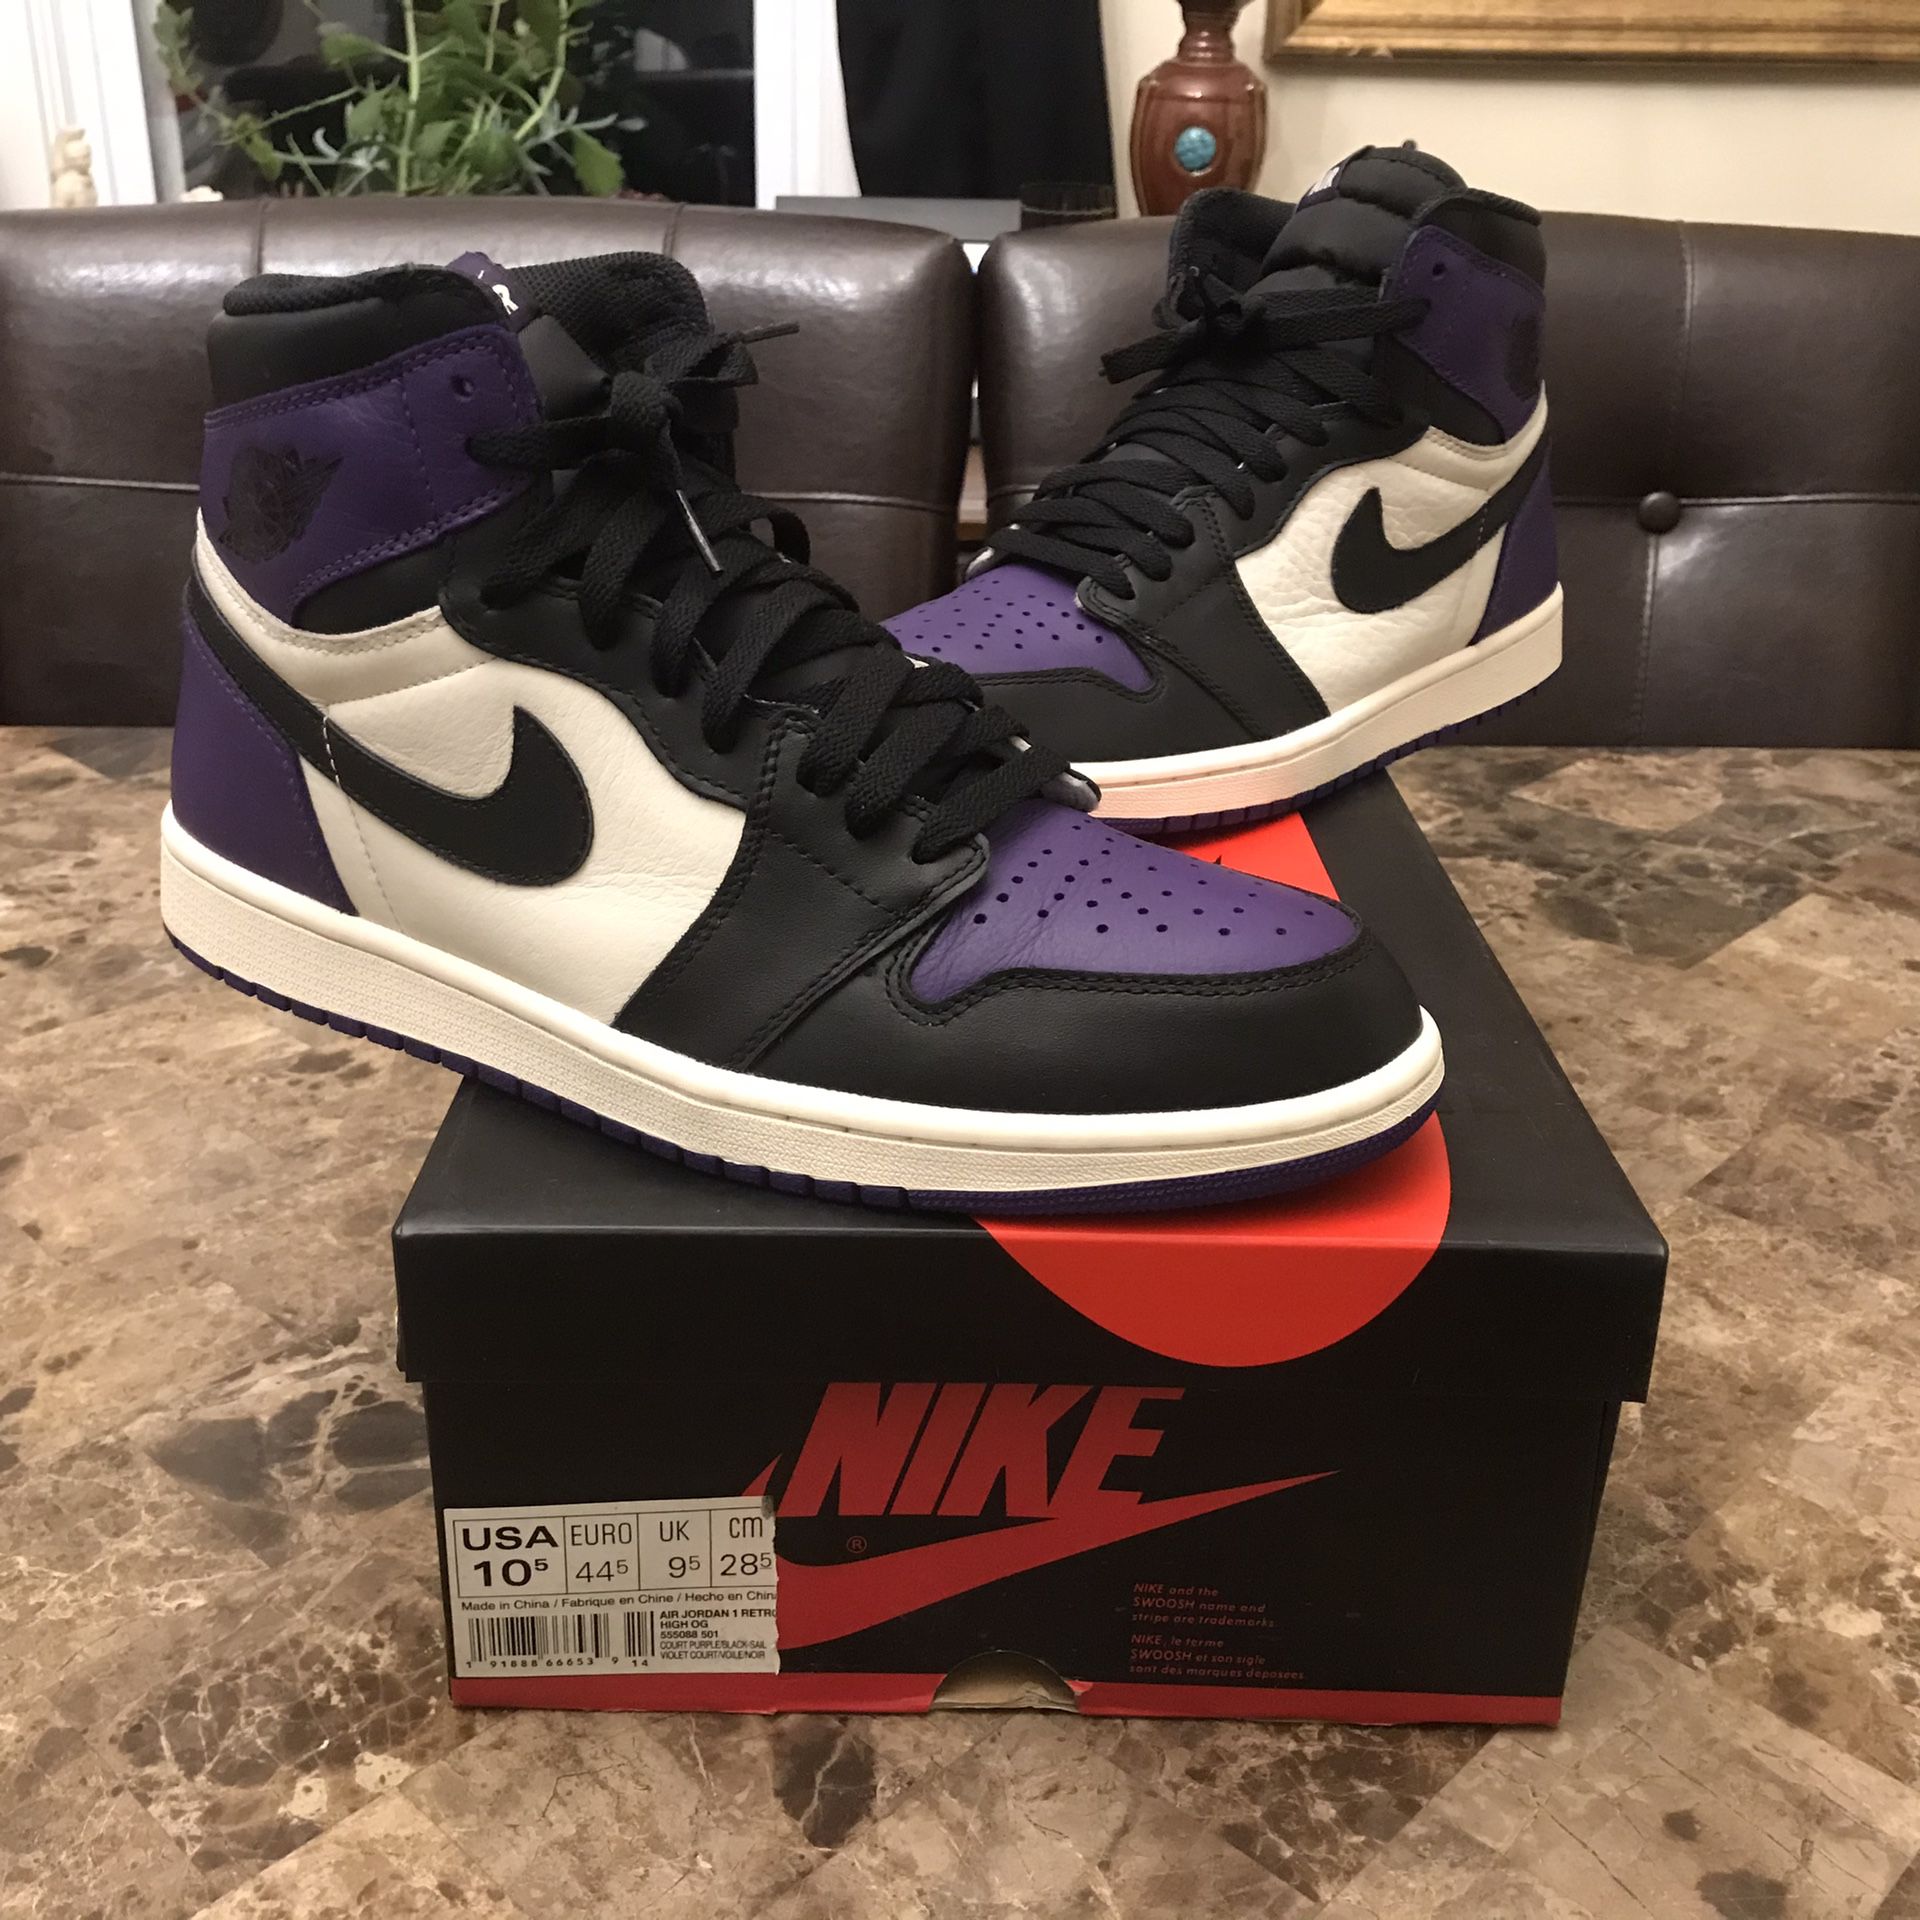 Nike Air Jordan 1 High Court Purple 1.0 size 10.5